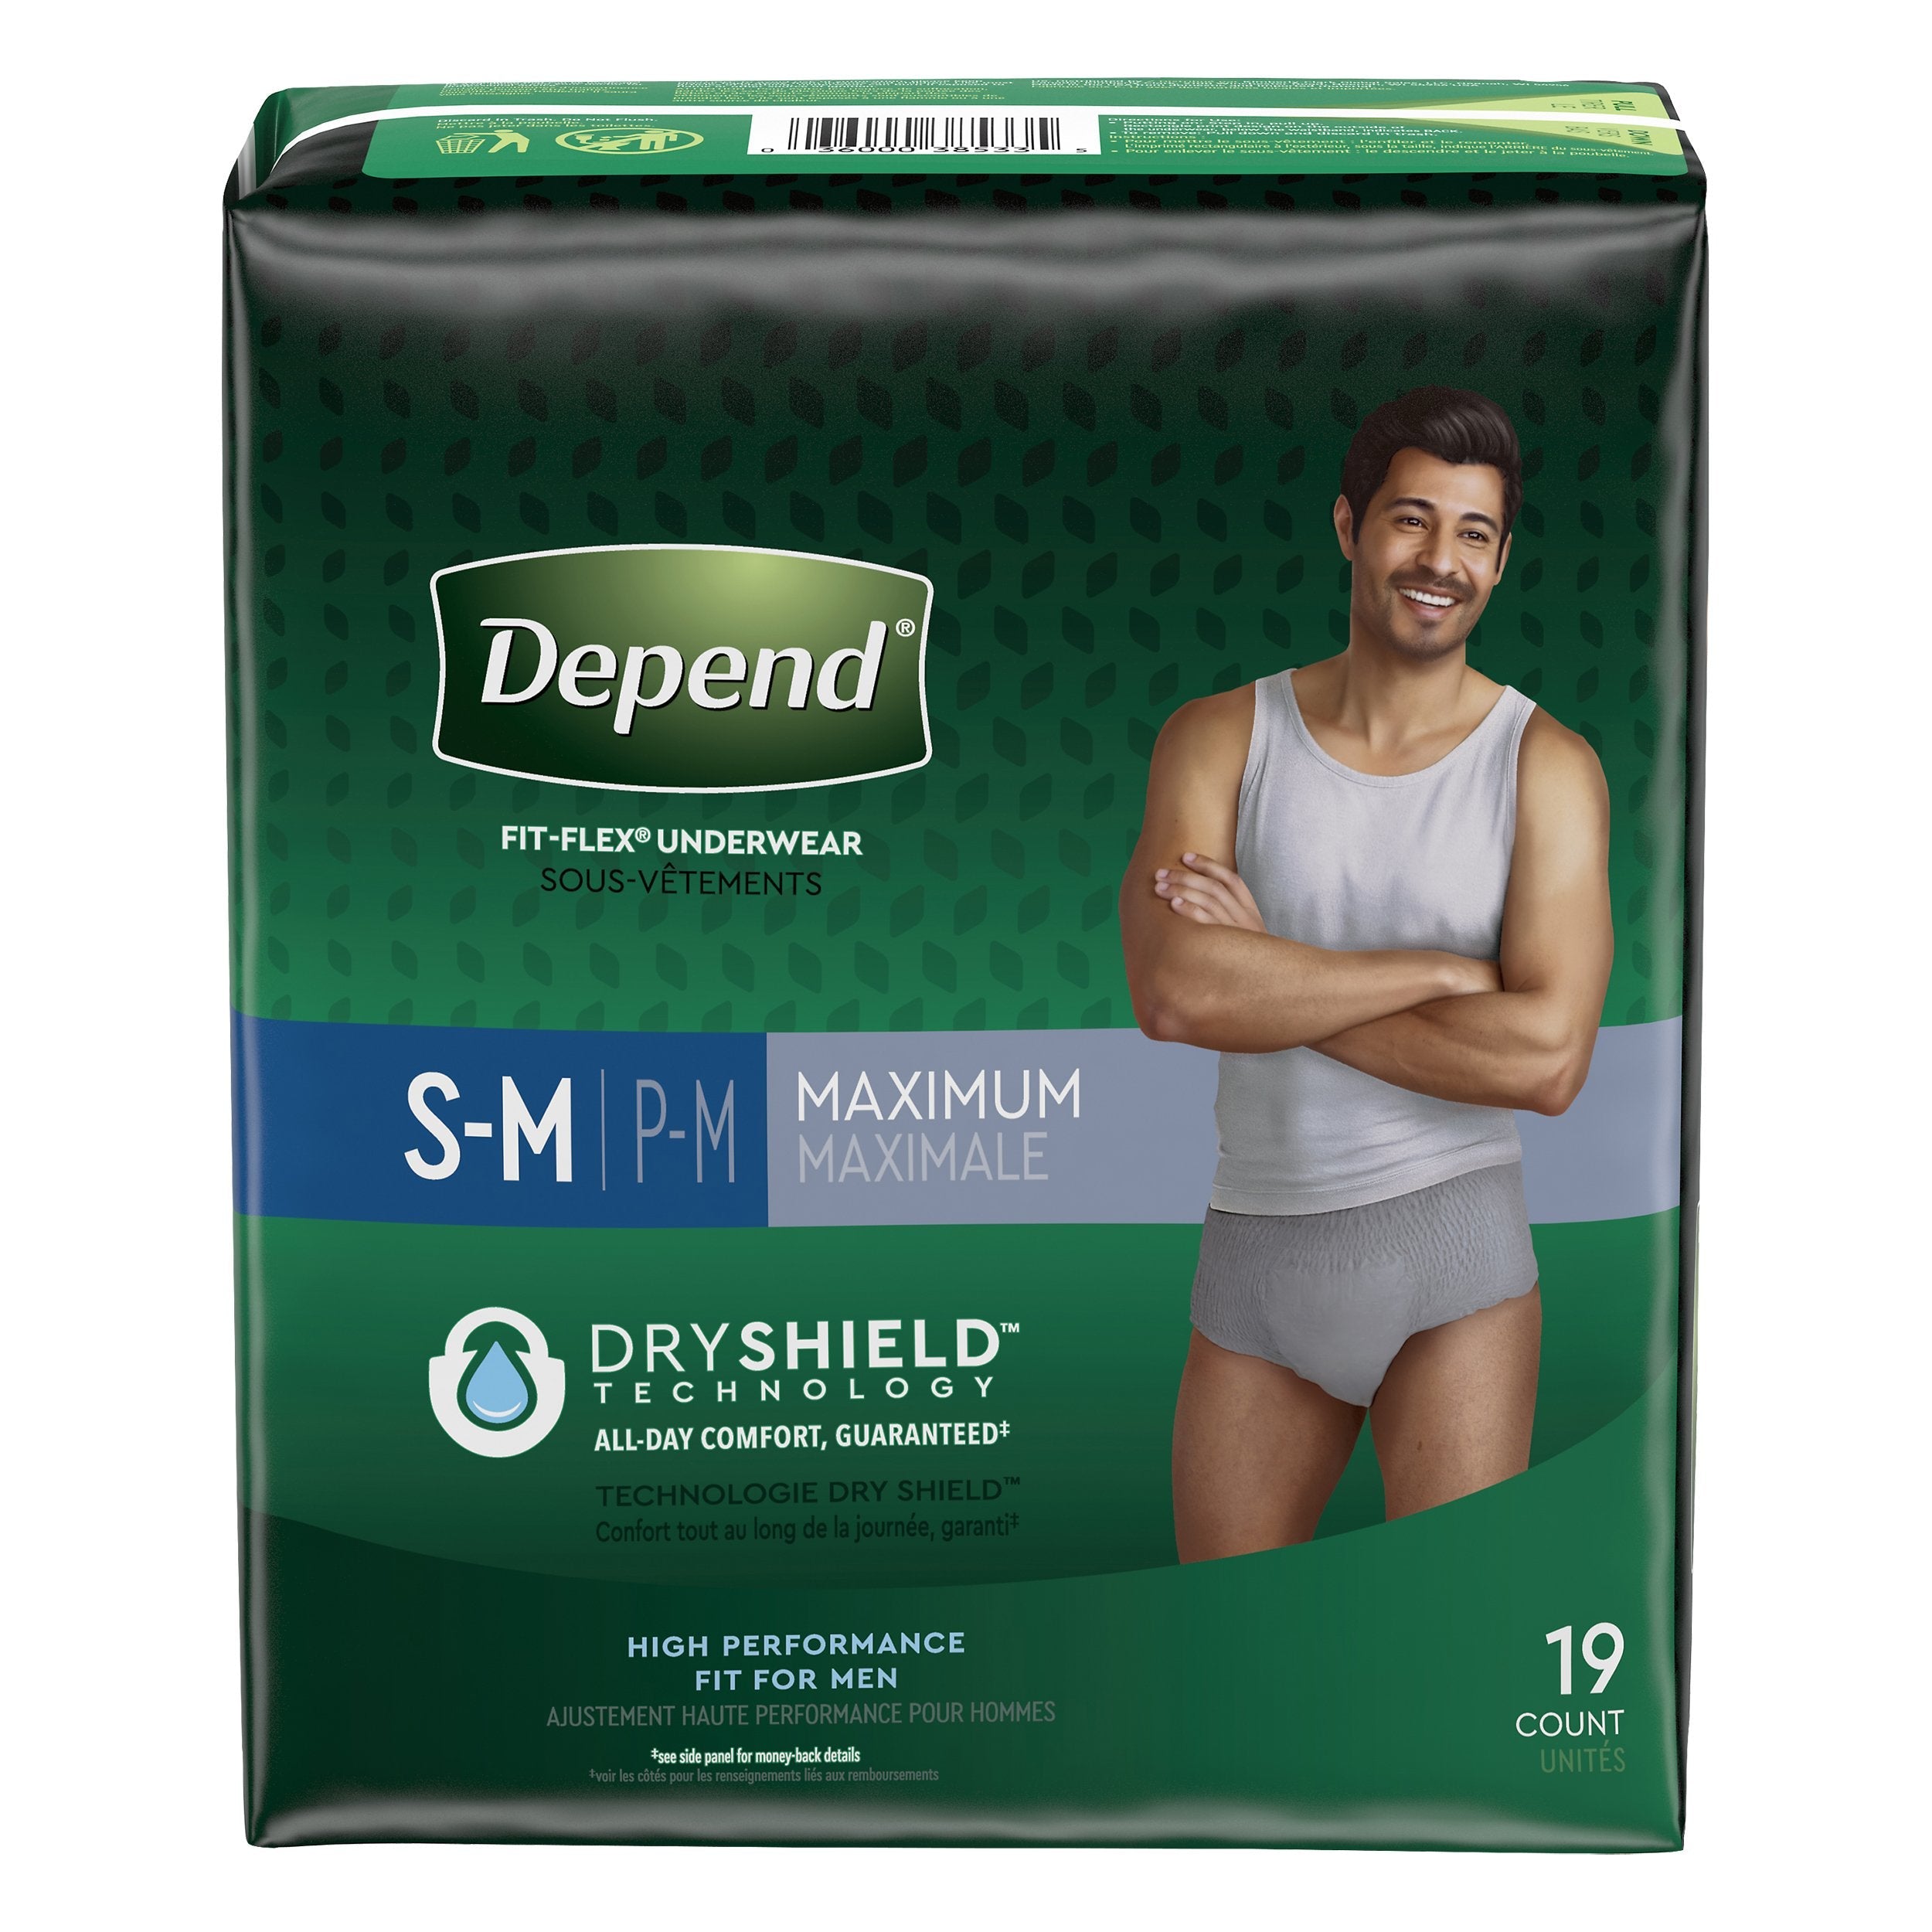 NEW DEPEND MAXIMUM DRY SHIELD Tech Fit Flex Underwear for Women